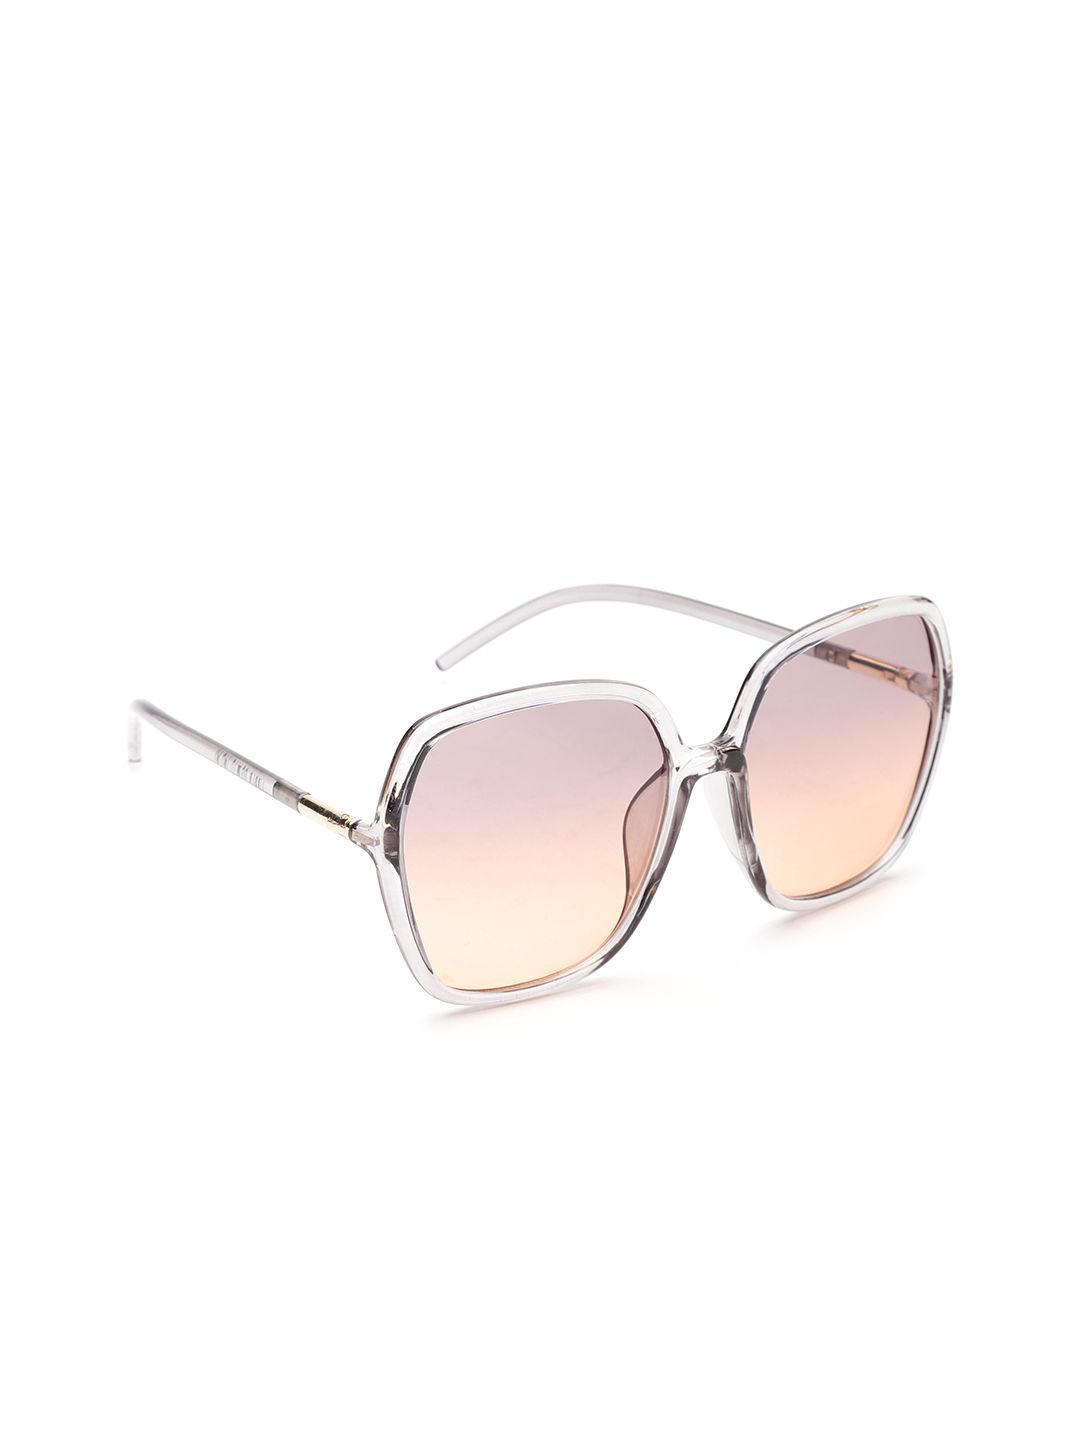 Carlton London Women Oversized Sunglasses A3070 Price in India